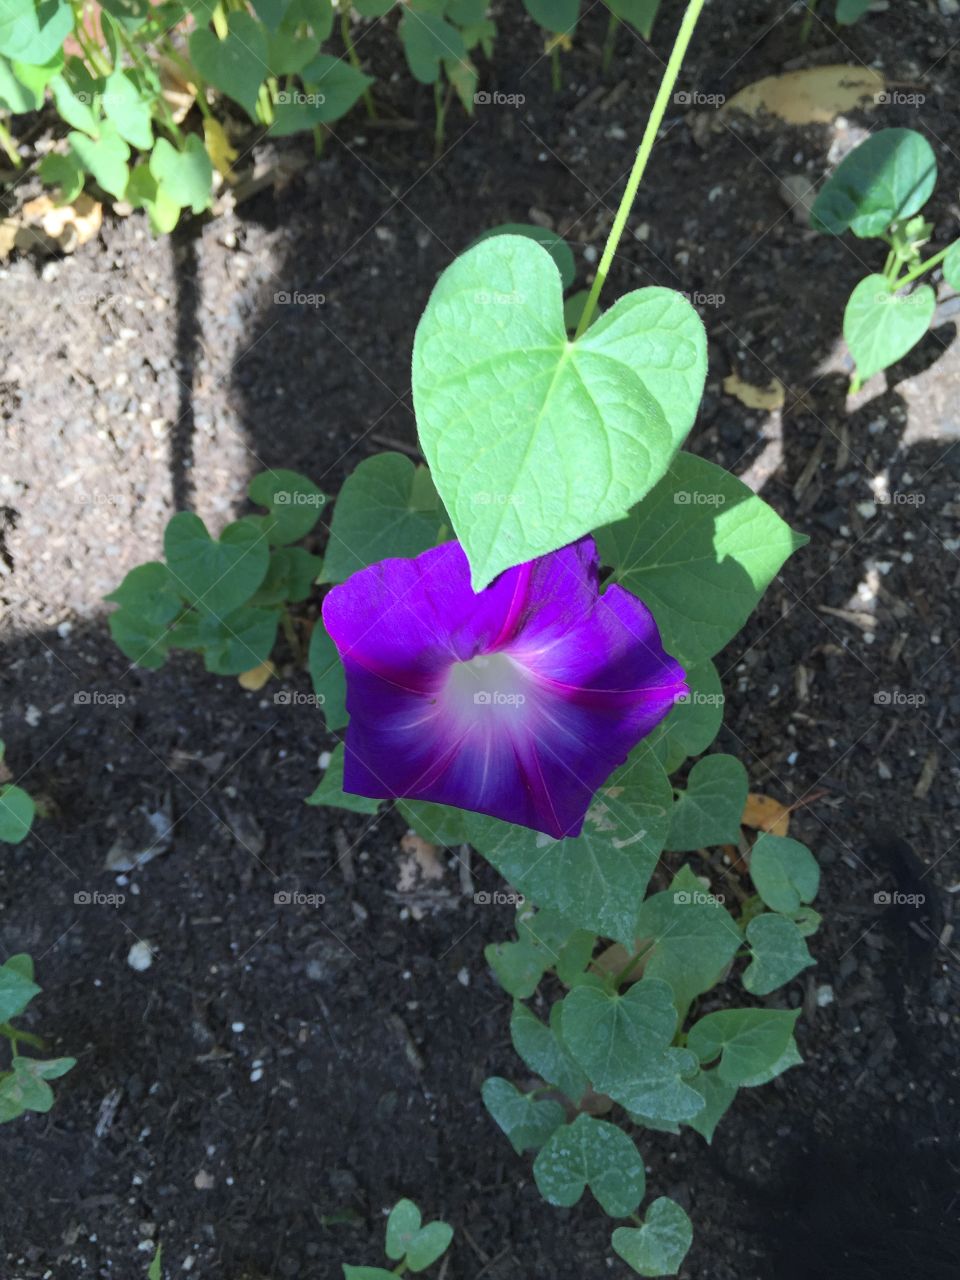 Heart shaped leaf & flower. Beautiful purple Morning Glory showing its heart shaped leaf.